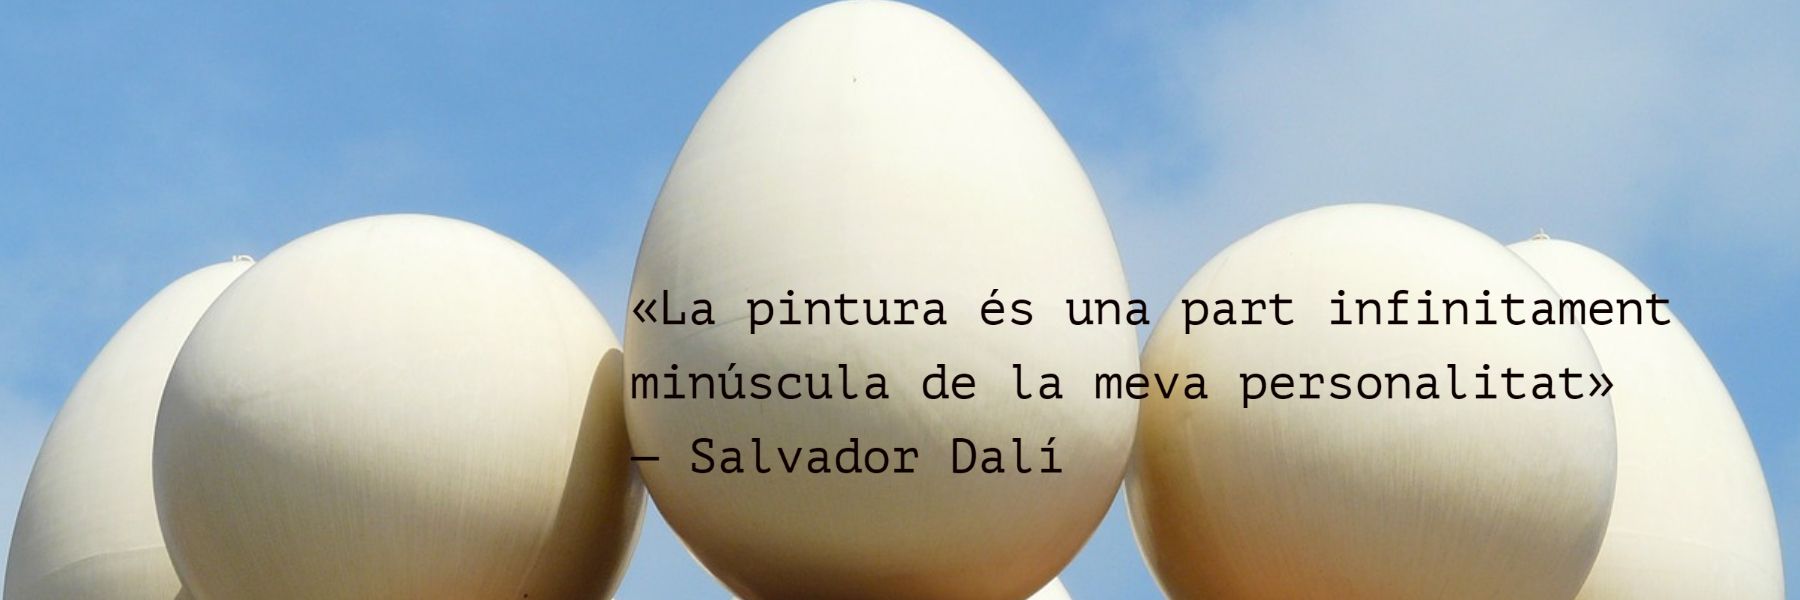 Premi de Recerca Salvador Dalí 2022